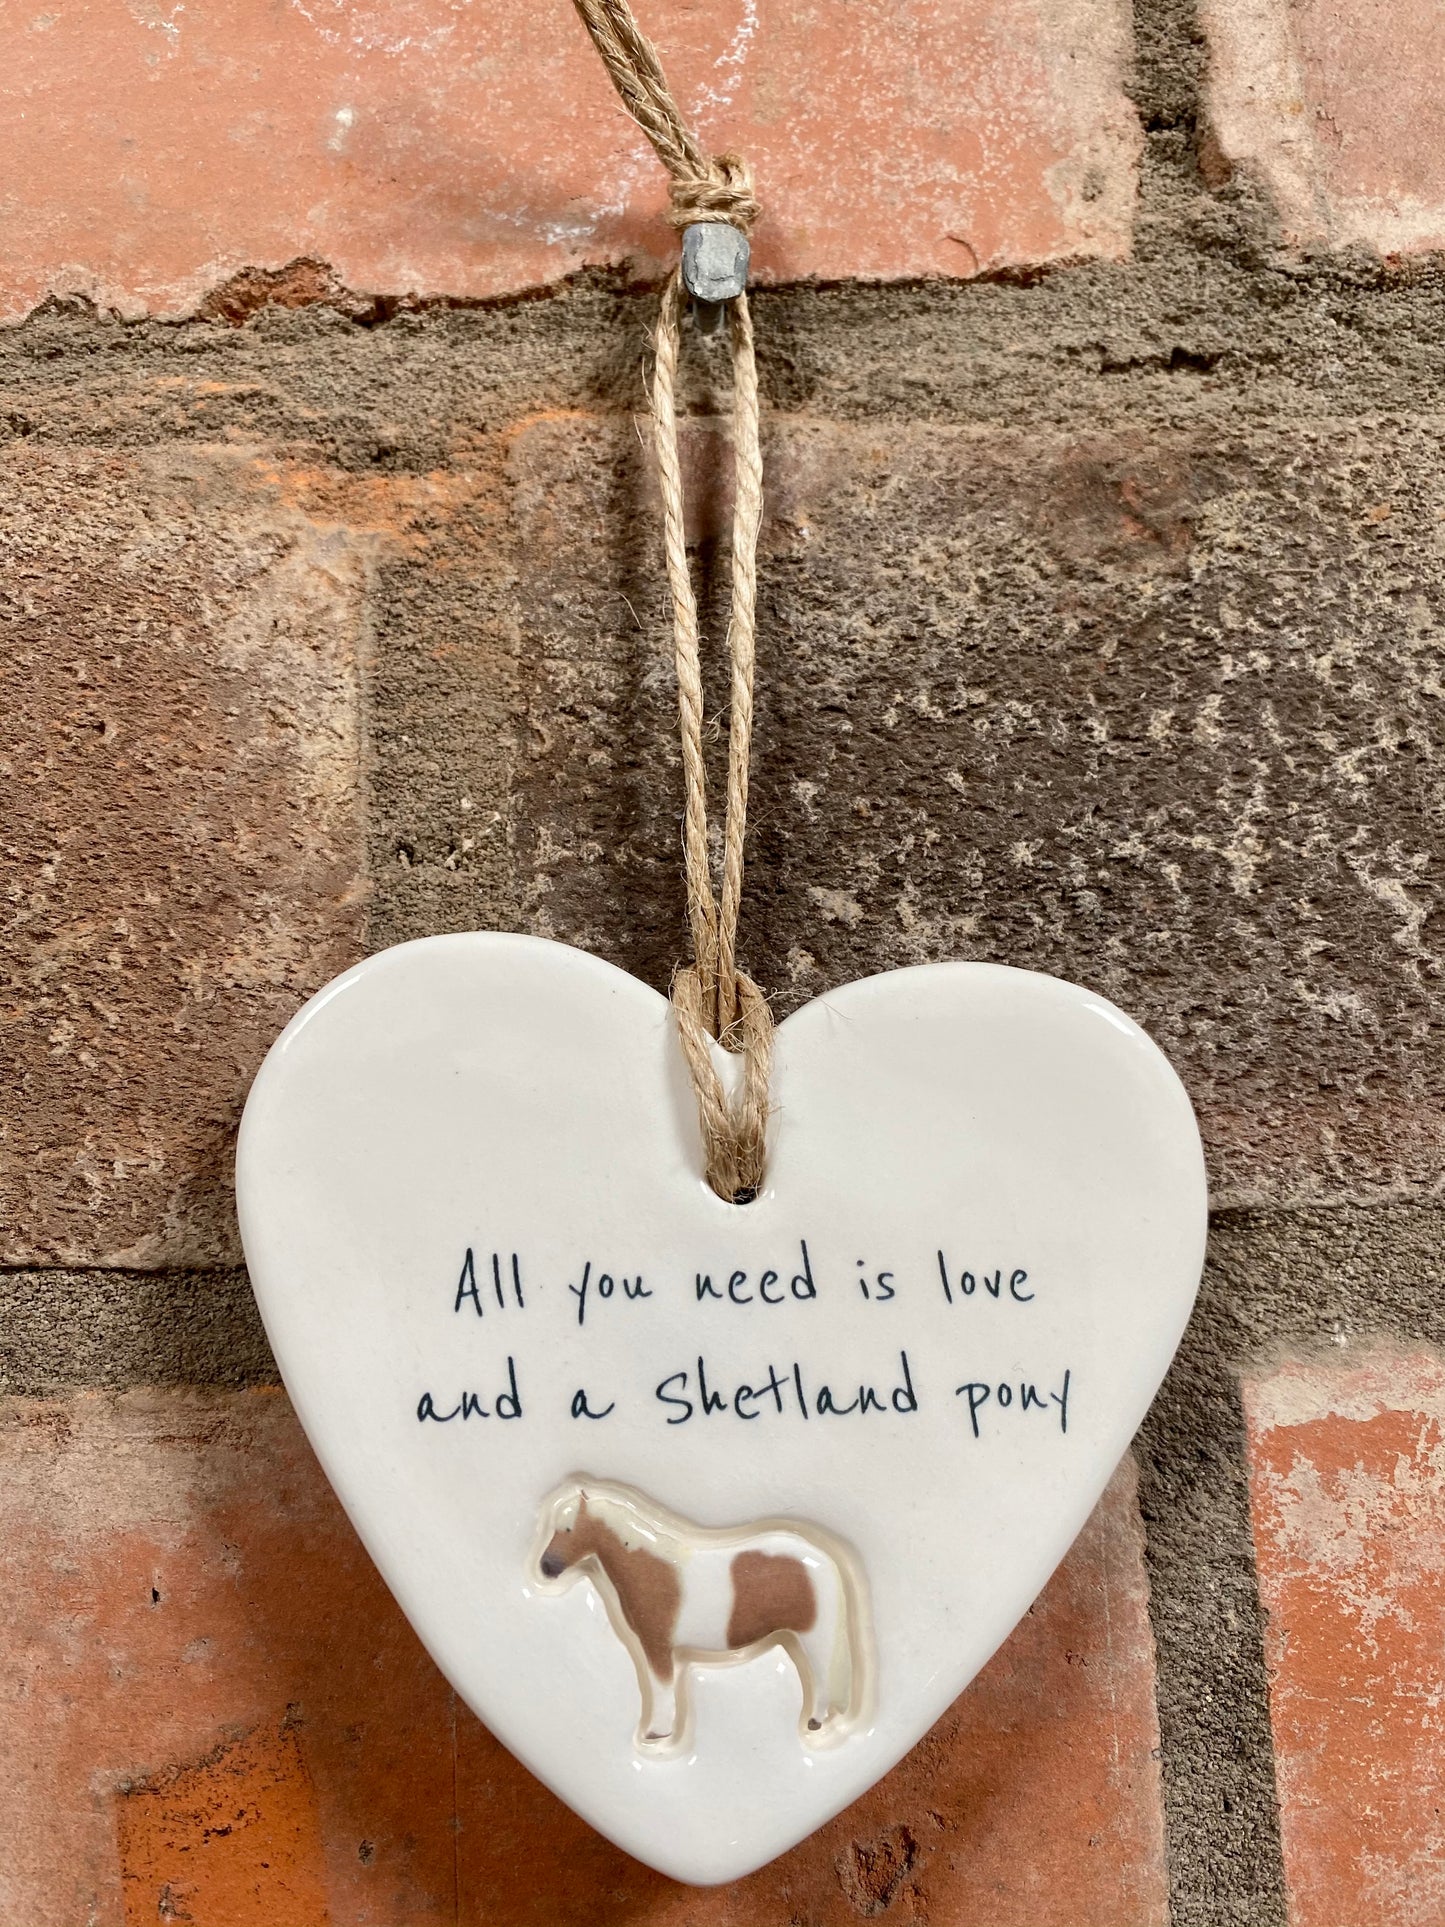 Shetland Pony ceramic heart